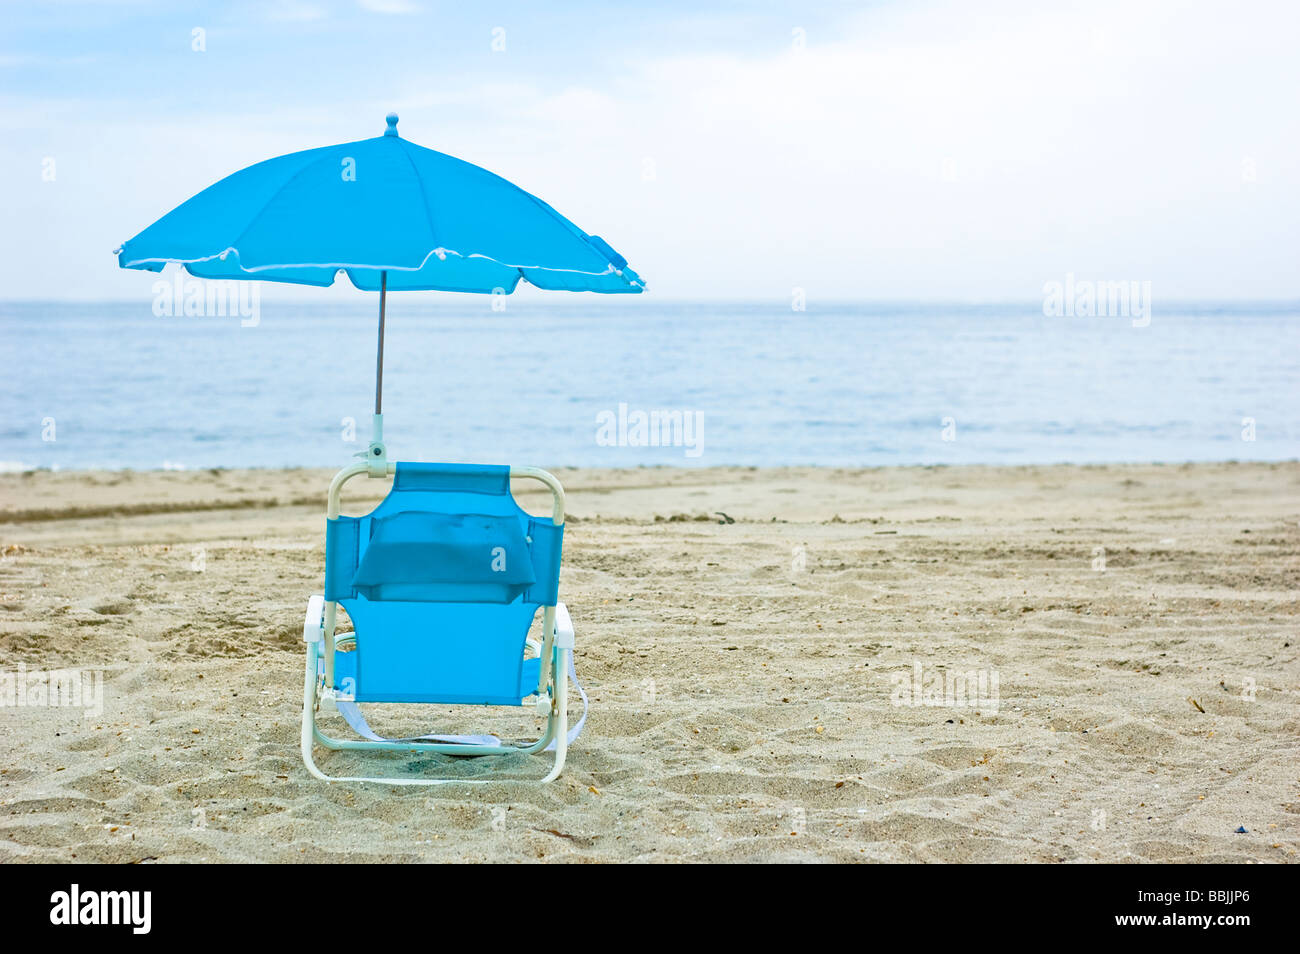 Blue beach chair overlooking empty ocean on beach Stock Photo